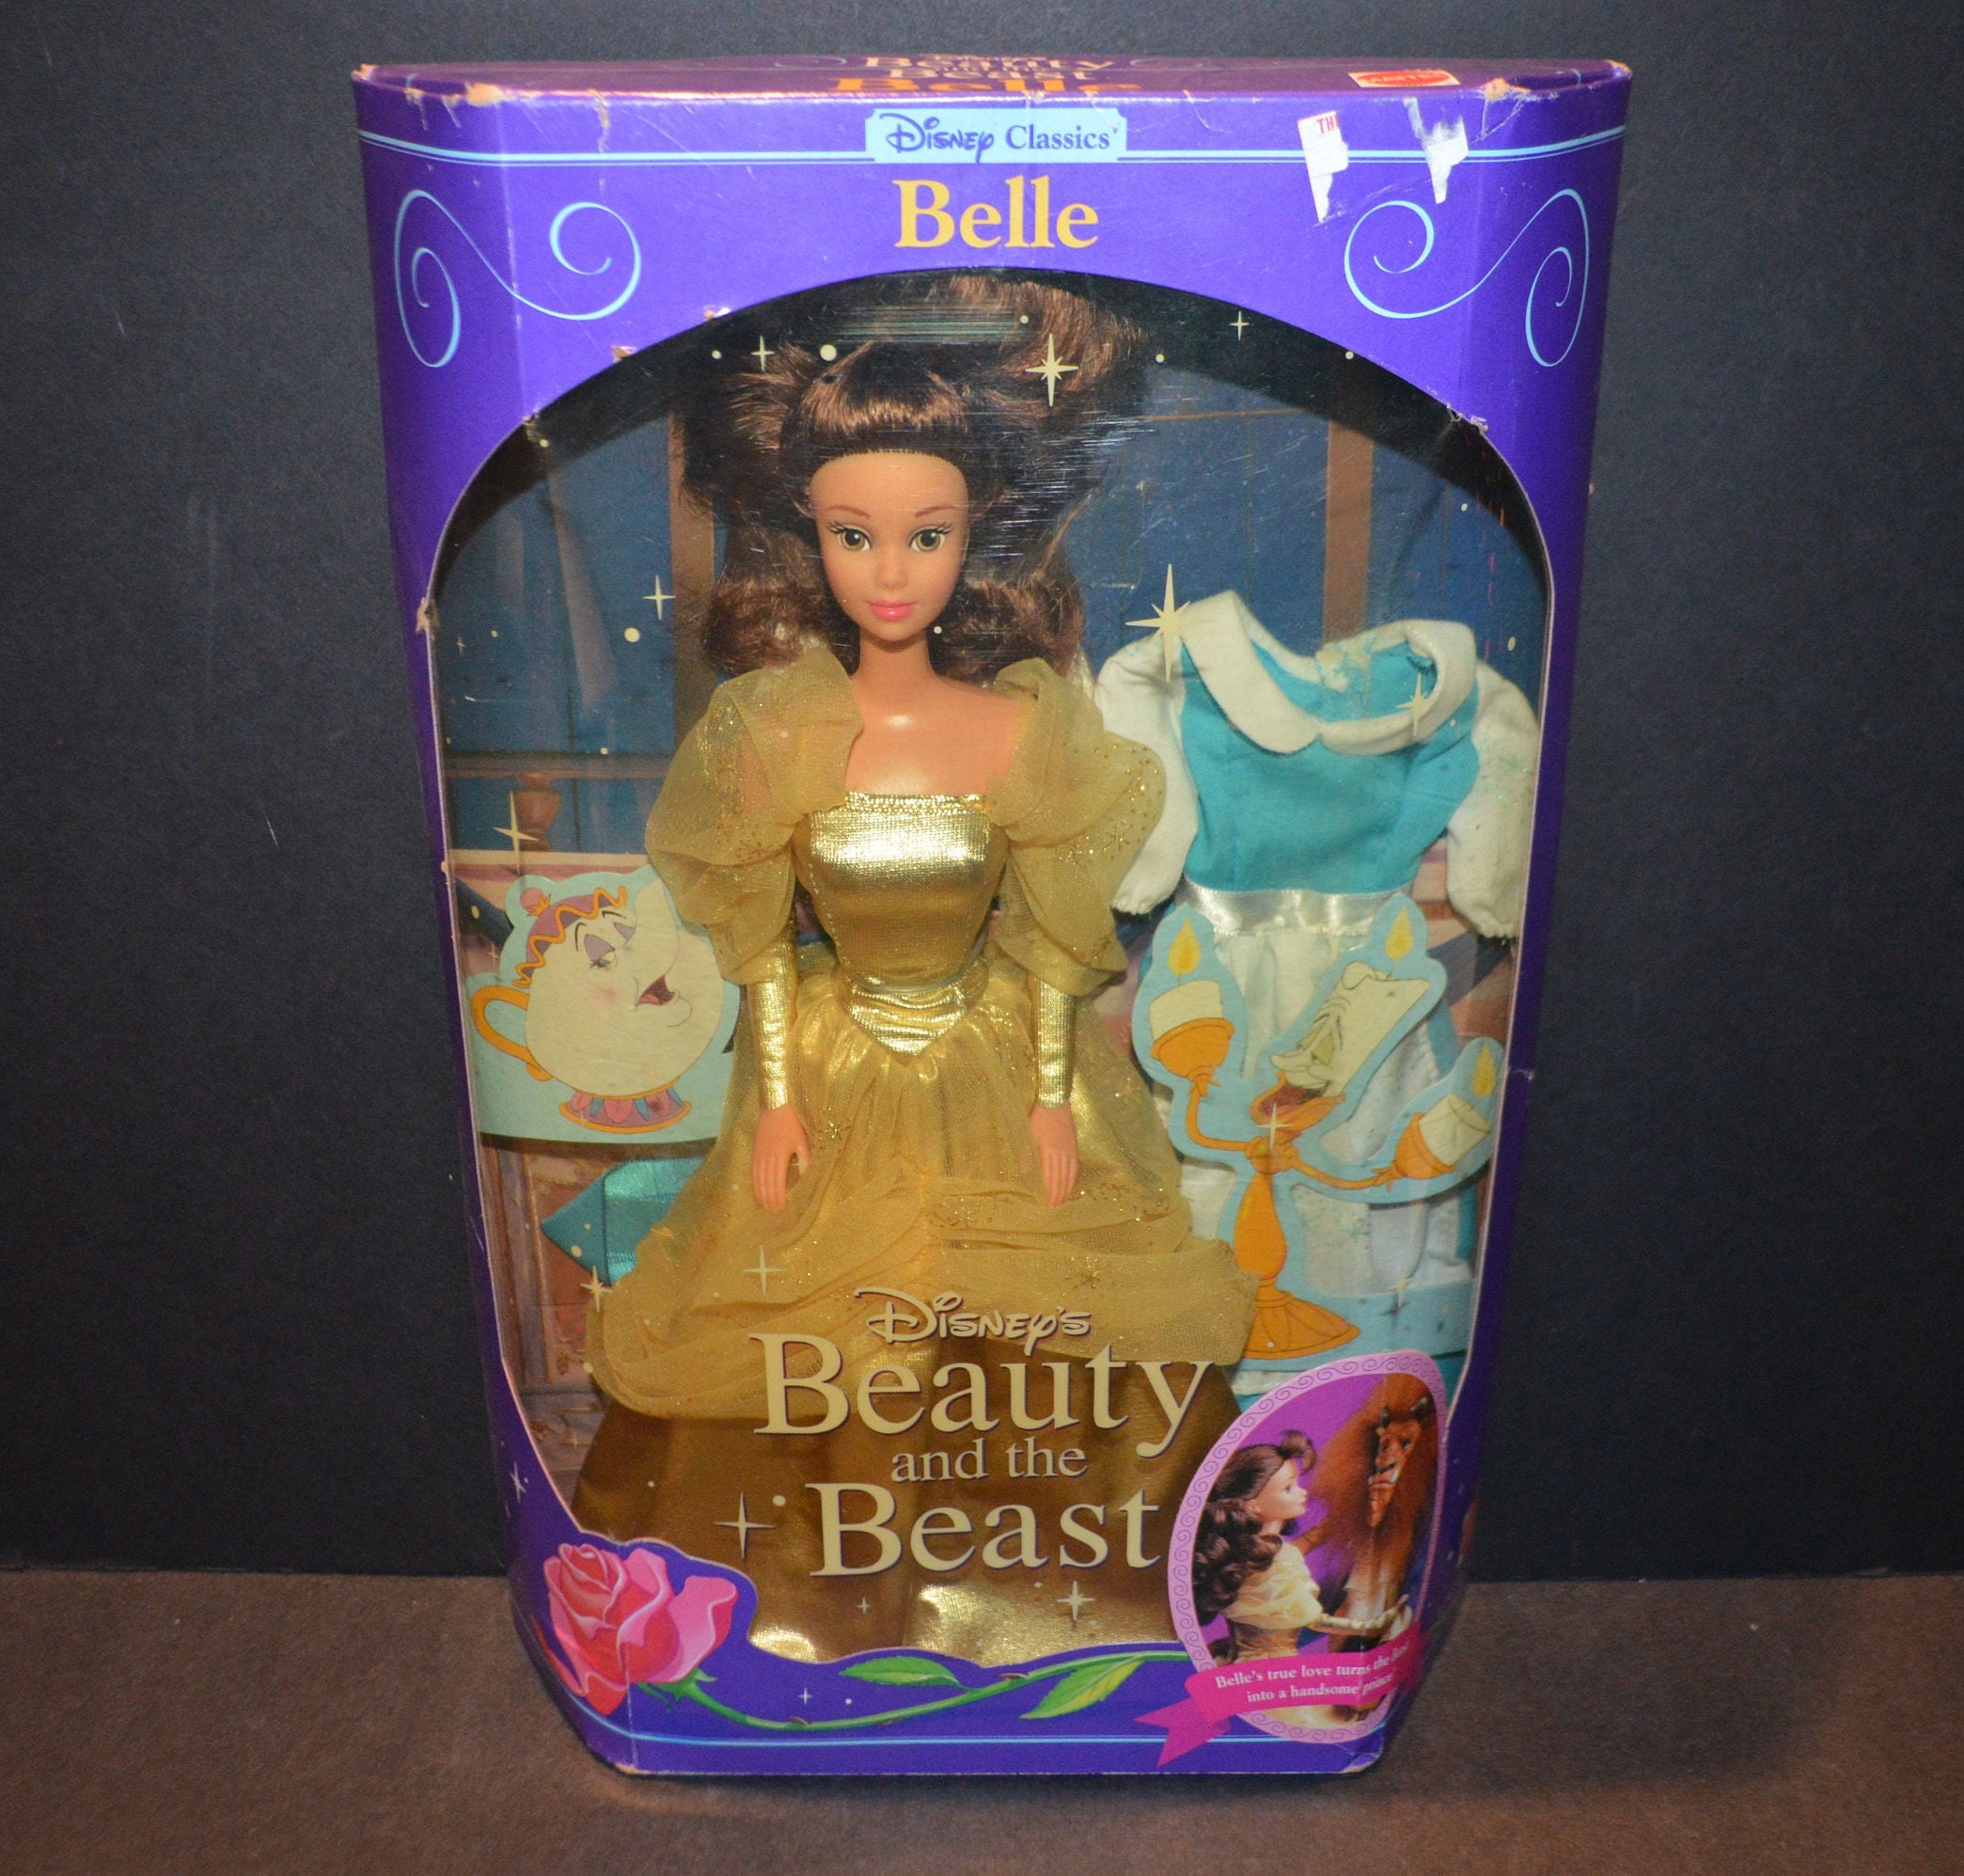 Disney Plush: Beauty & the Beast Belle the Princess